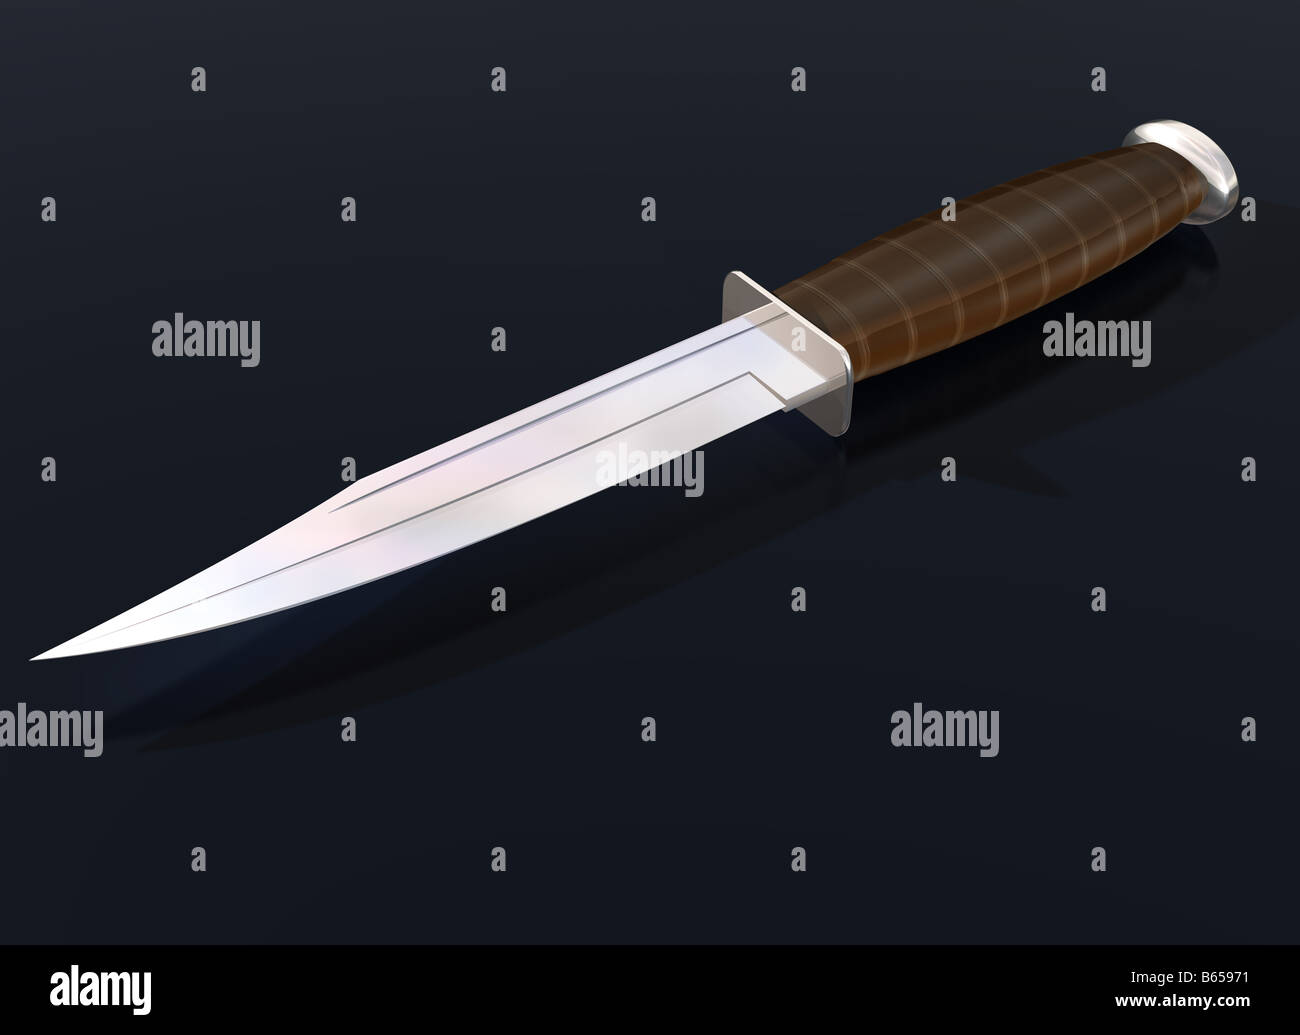 Illustration of a shiny new hunting knife Stock Photo